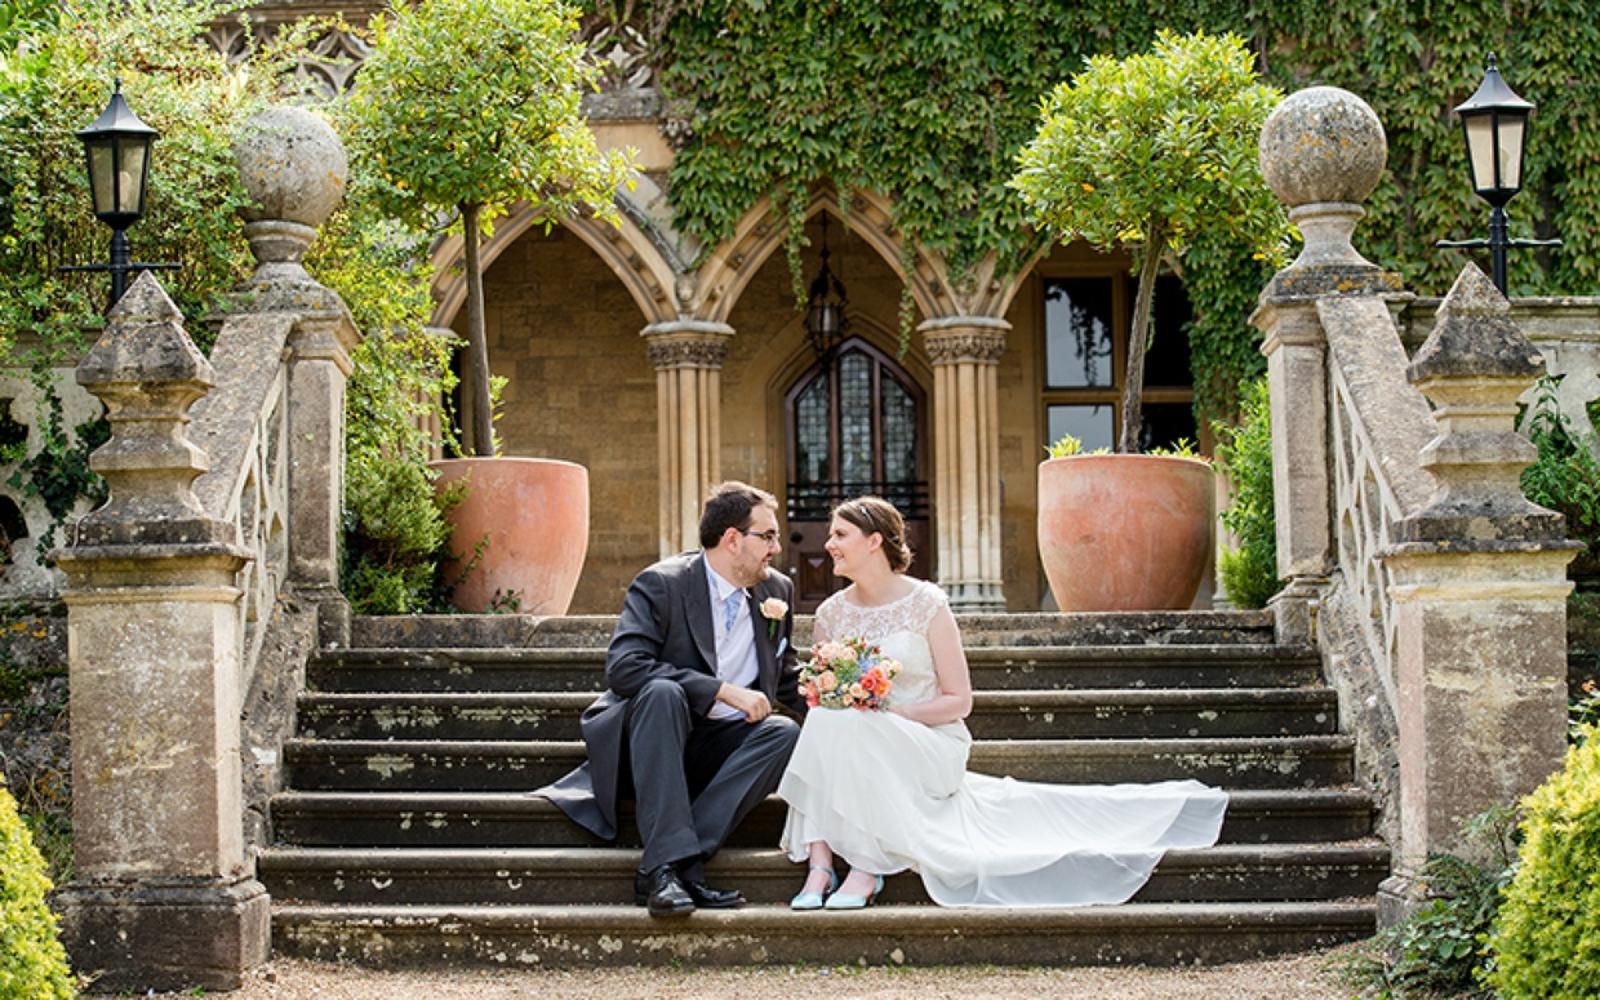 Capture Every Moment Real Wedding photographer Cirencester Manor by the Lake Cheltenham splendid gardens 